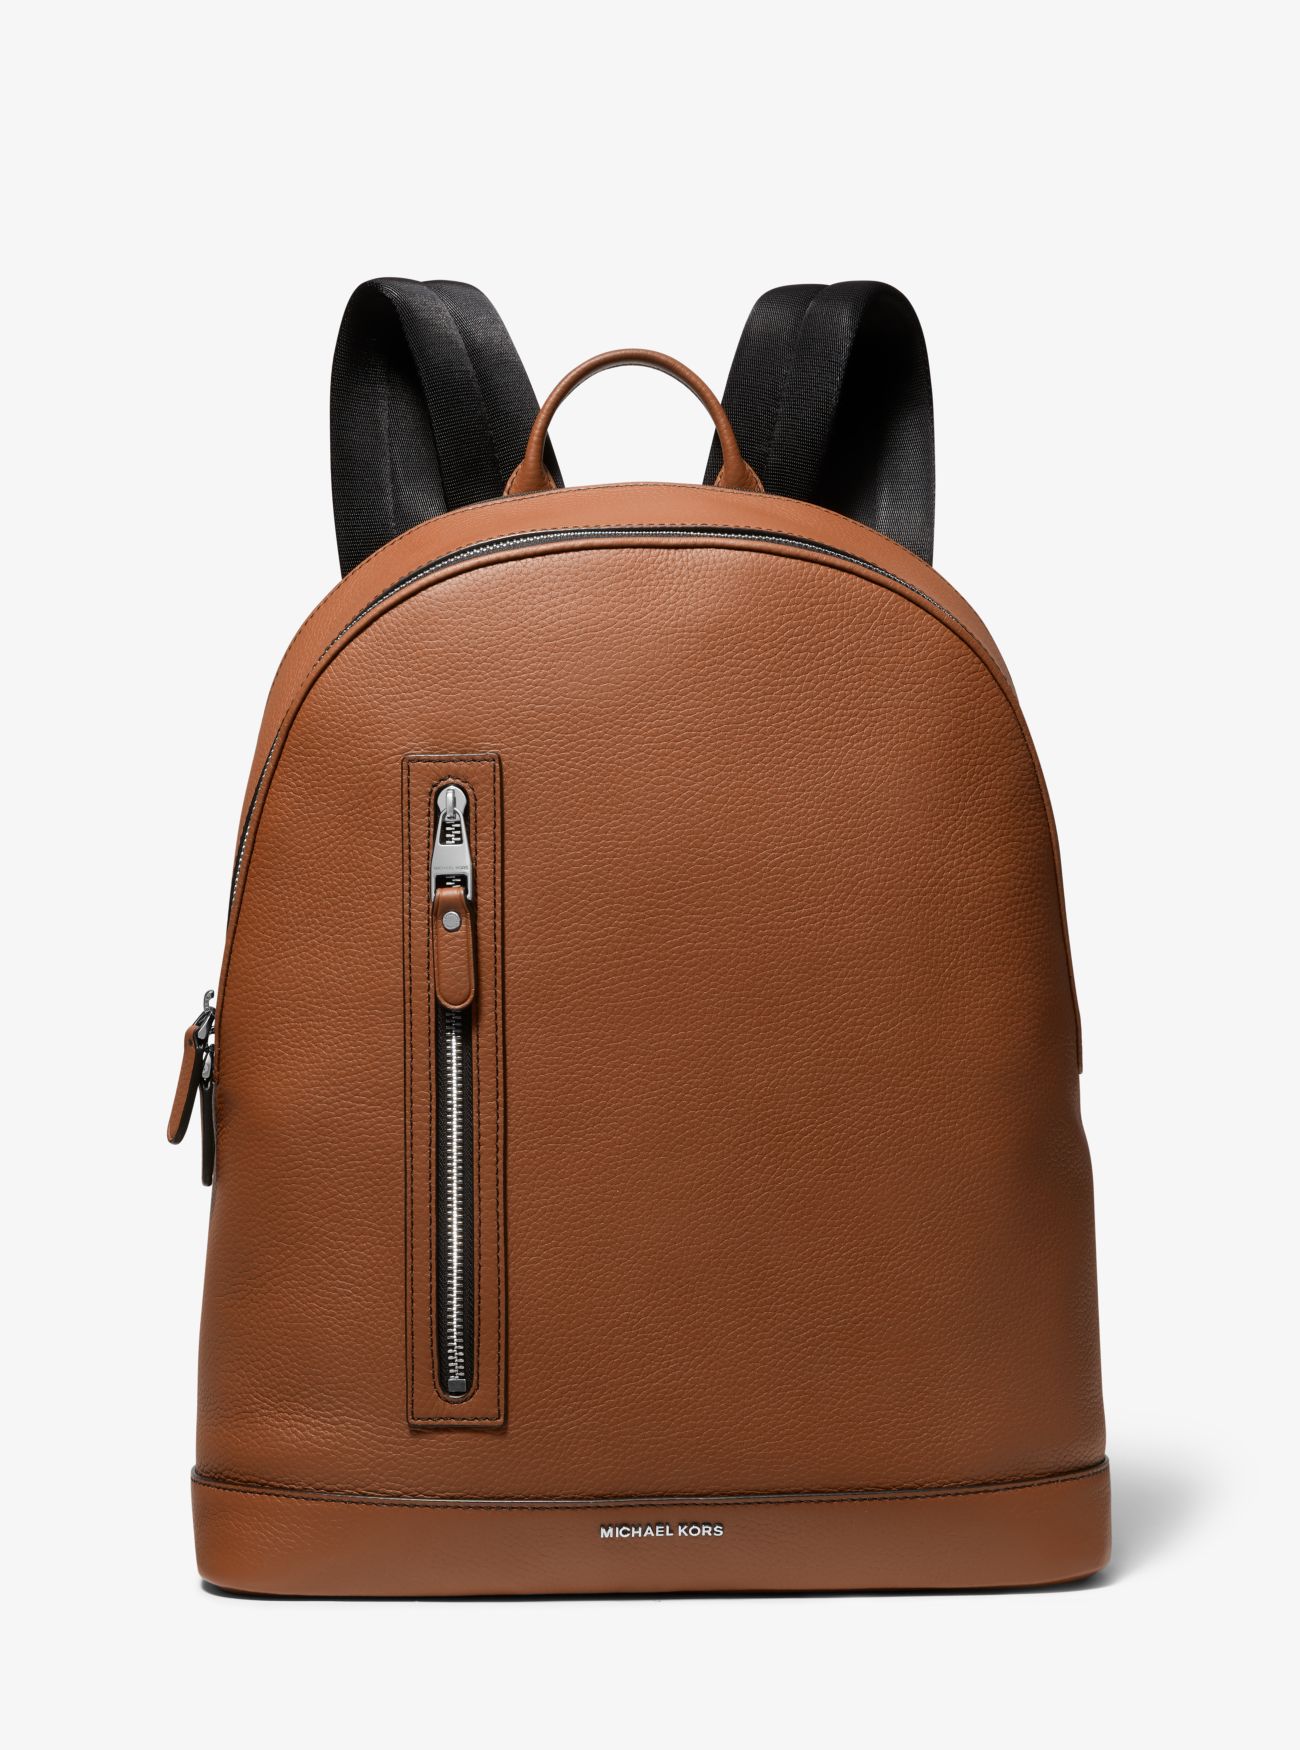 MK Hudson Slim Pebbled Leather Backpack - Luggage Brown - Michael Kors